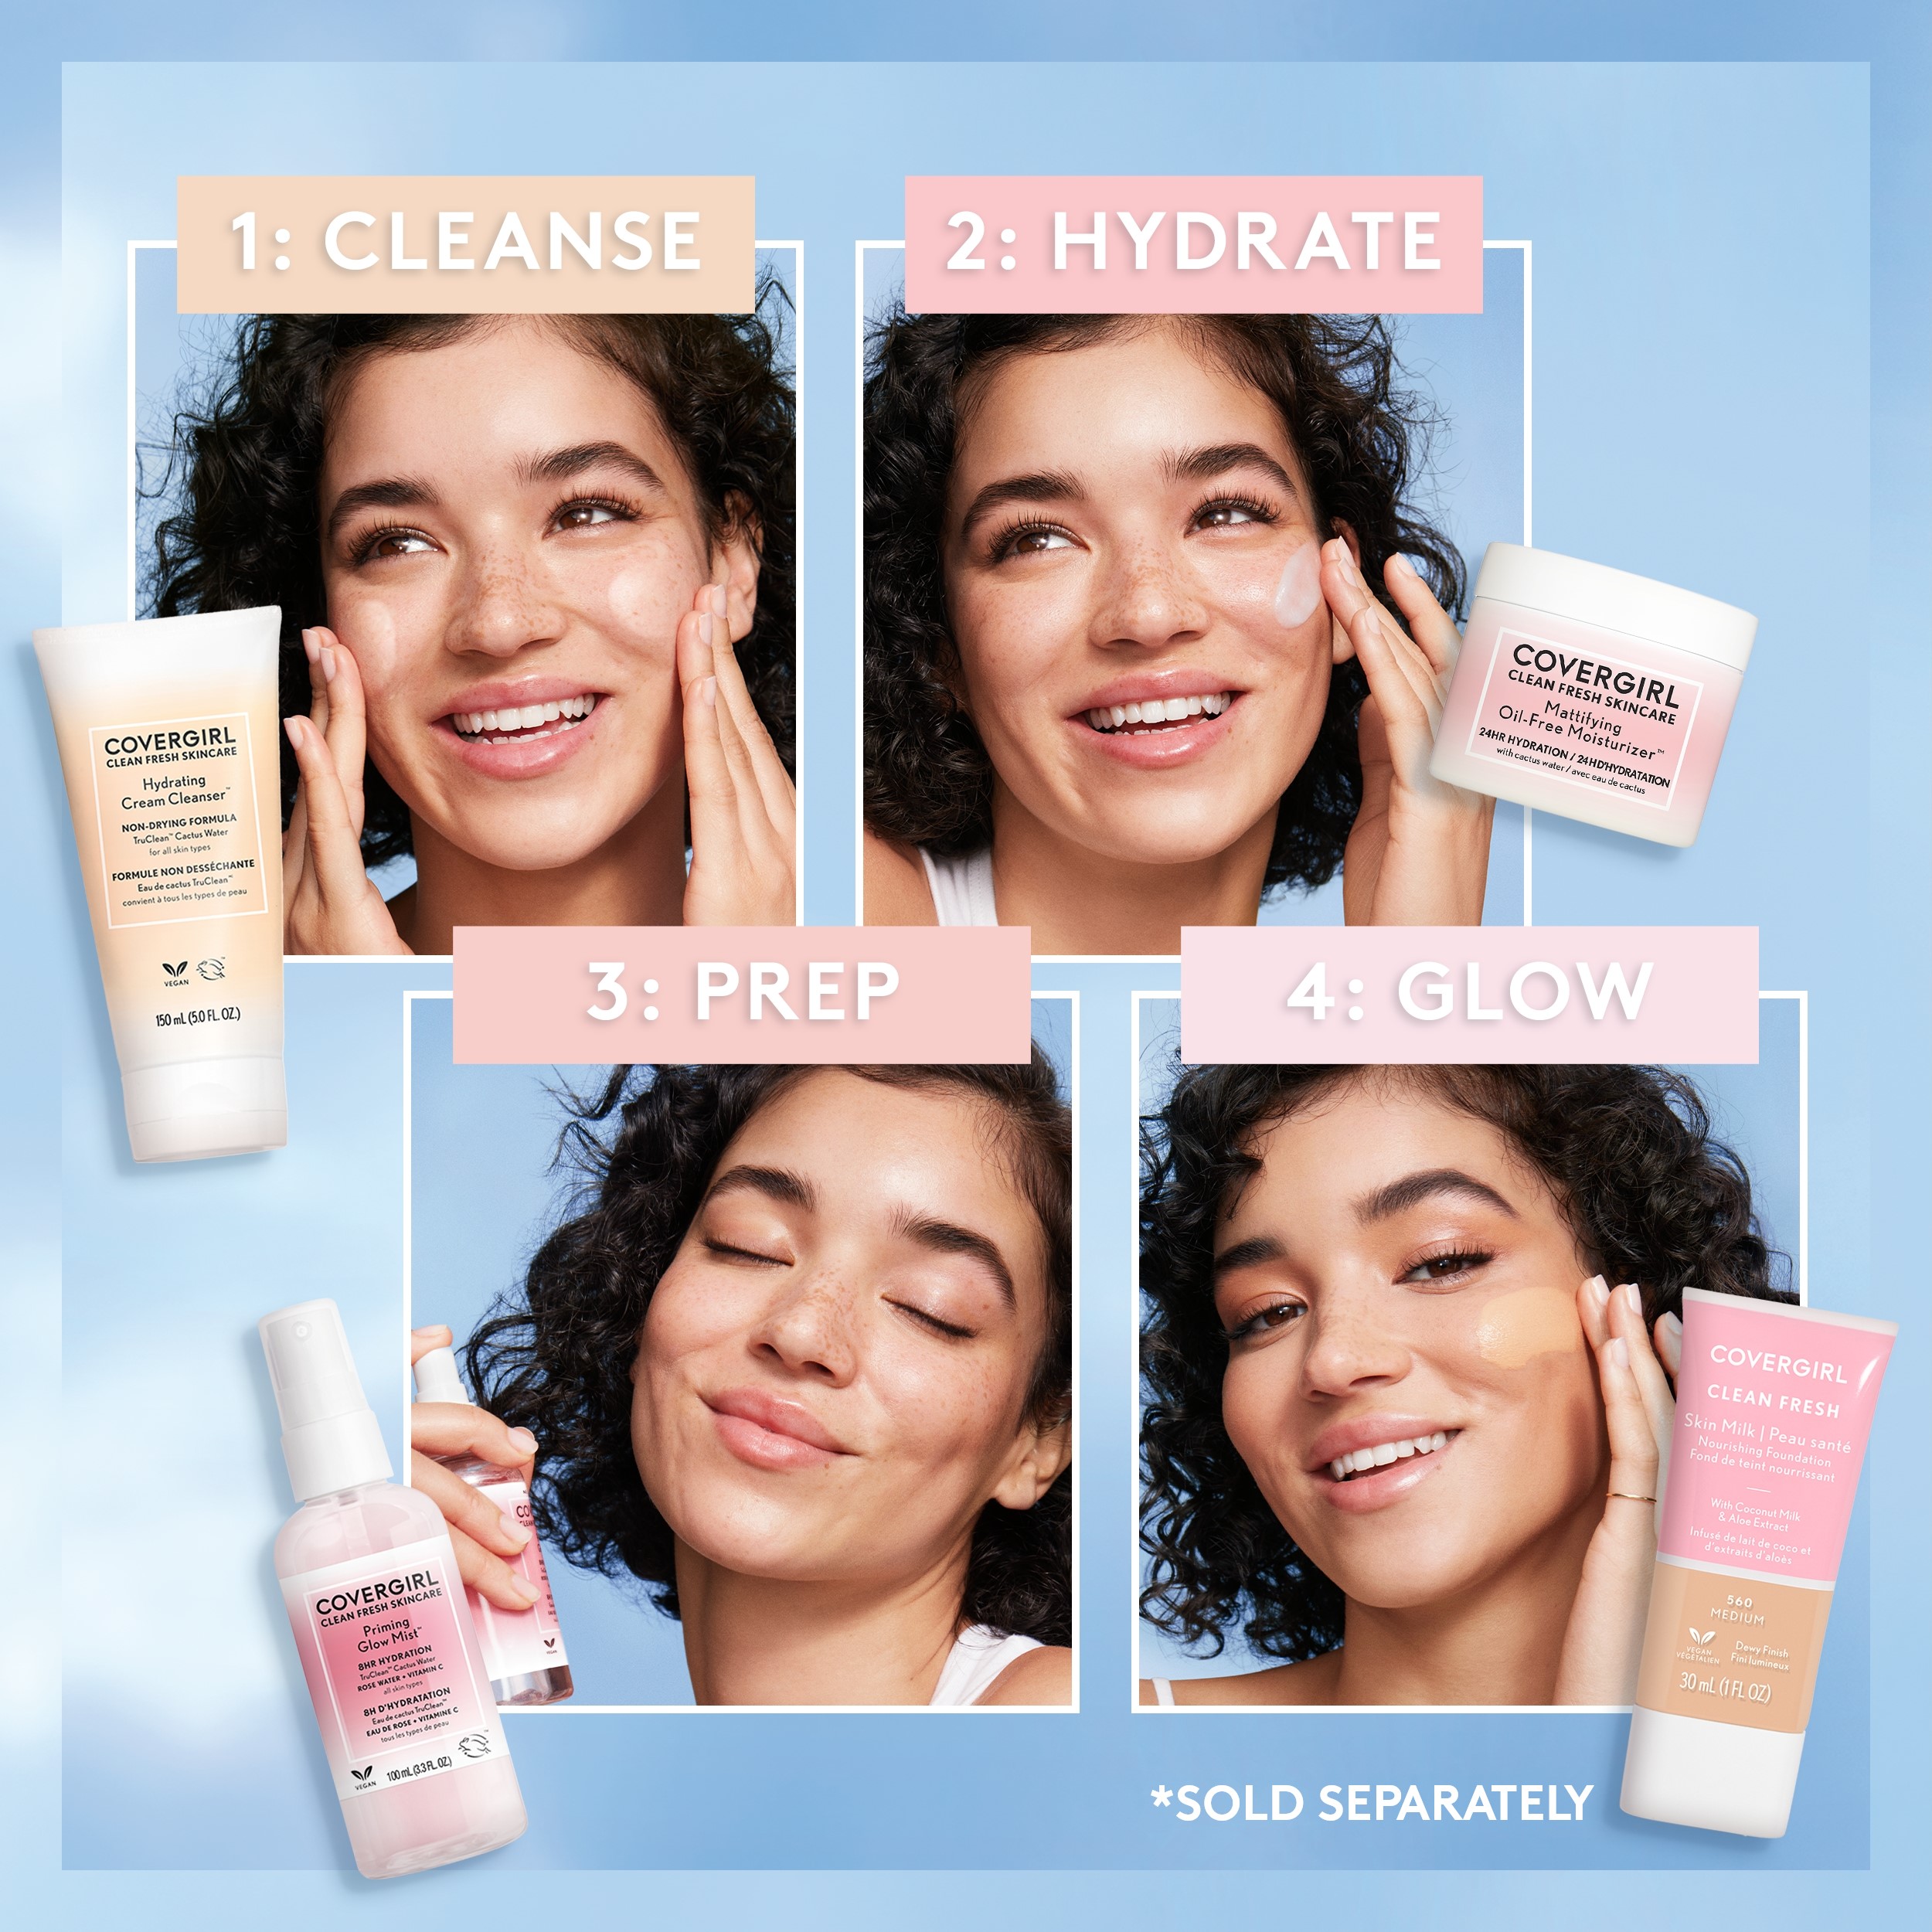 COVERGIRL Clean Fresh Skincare Mattifying Oil-Free Face Moisturizer, 2.0 fl oz - image 5 of 10